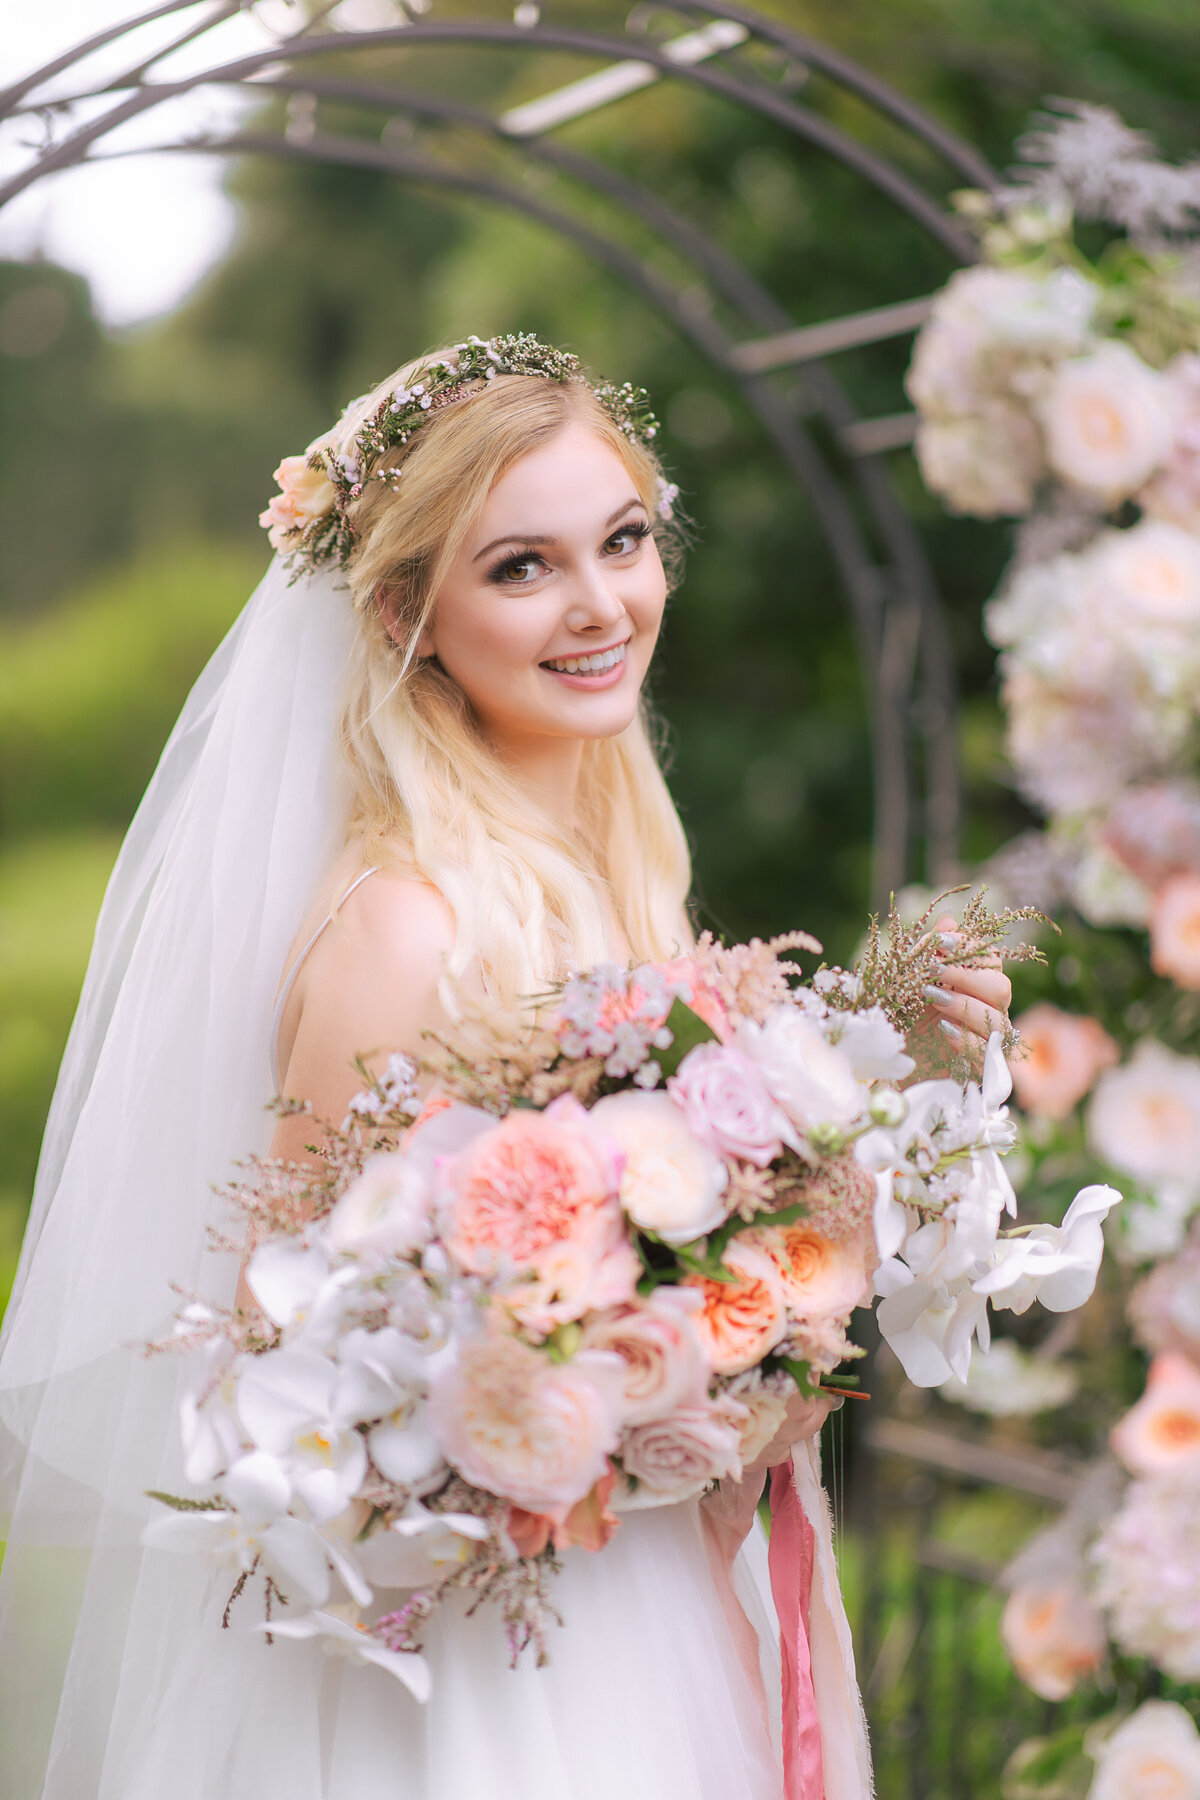 Autumn Marcelle is a Santa Cruz, CA based Wedding Florist specializing in garden-inspired design.